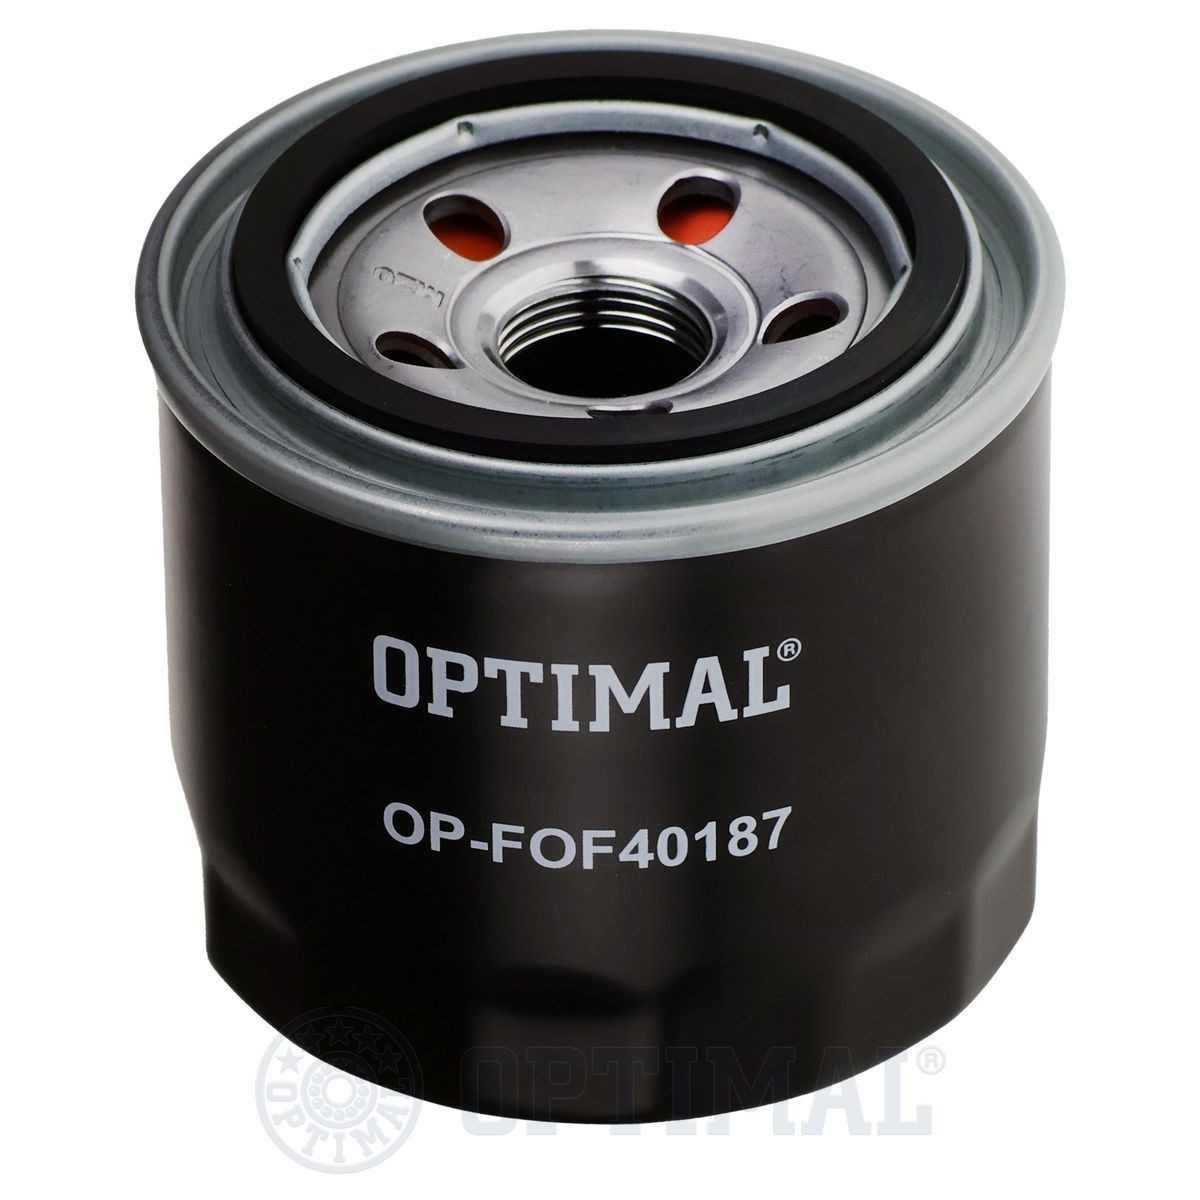 OPTIMAL OP-FOF40187 Oil filter 97 209 306